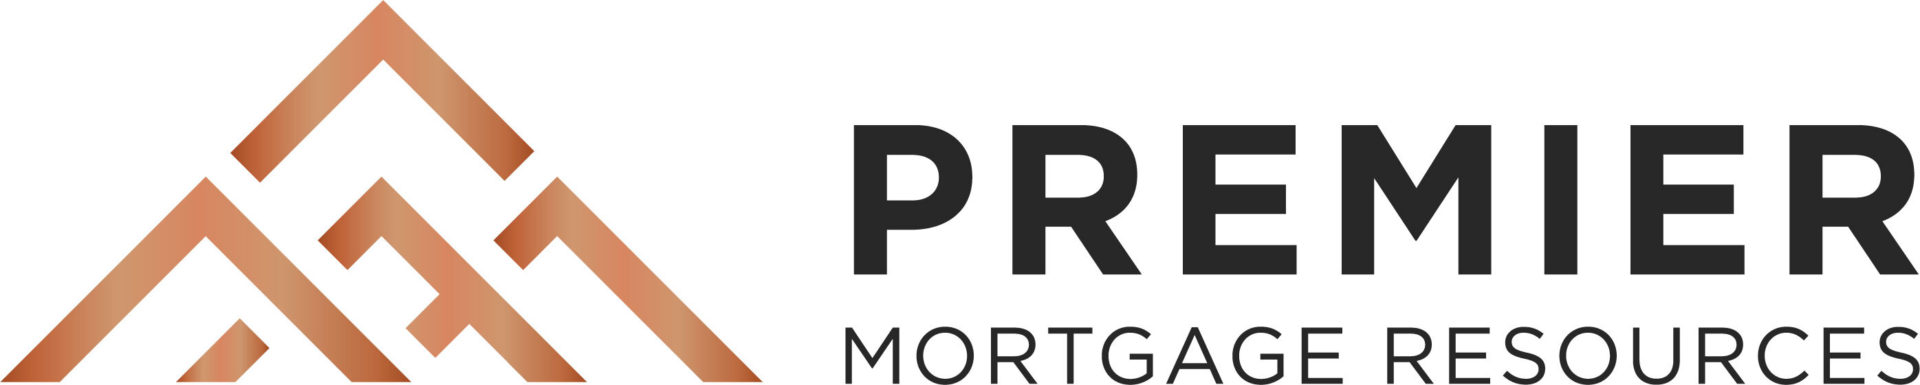 pmr loan logo